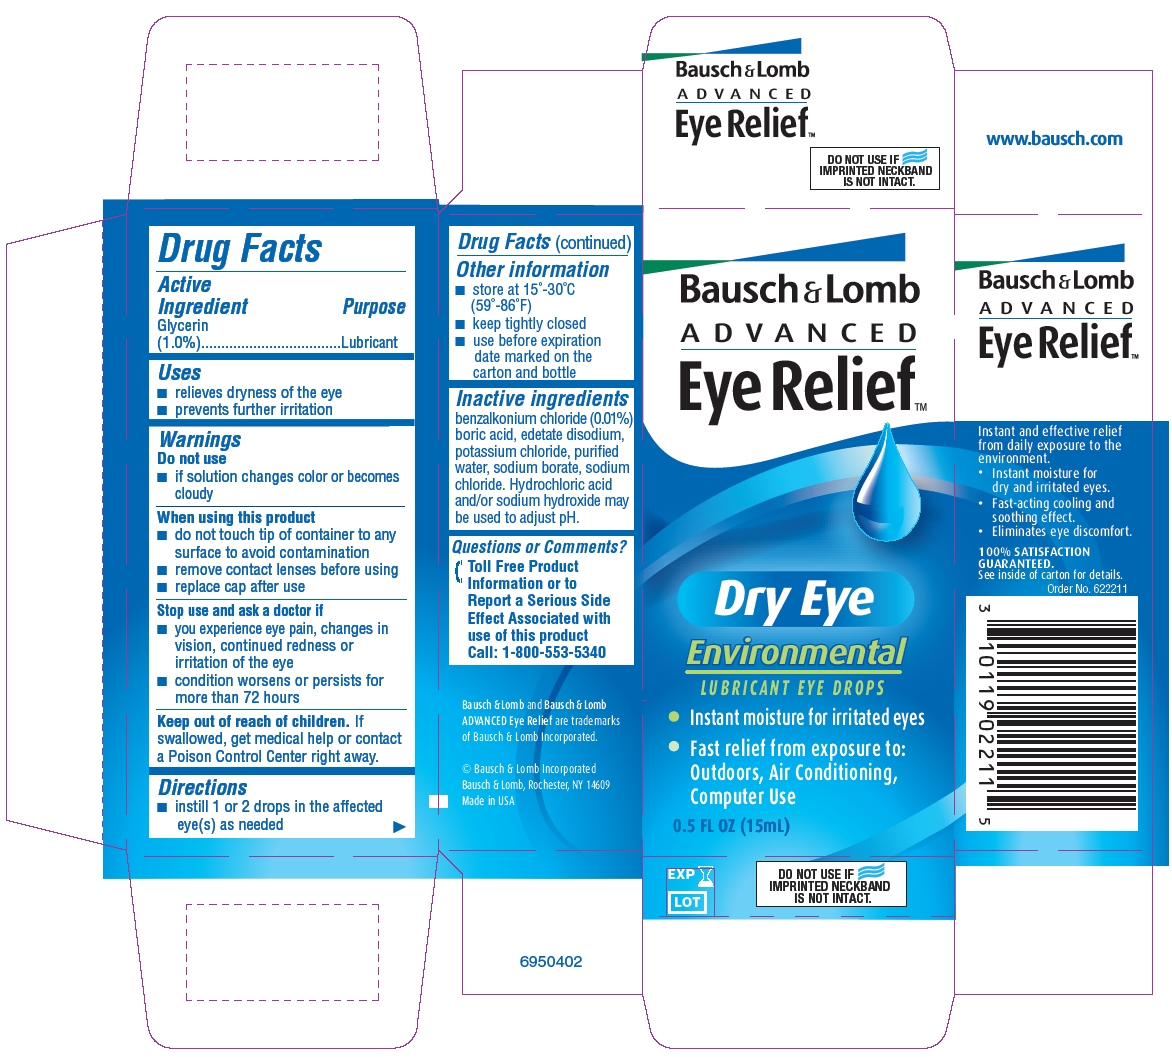 B&L Advanced Eye Relief Dry Eye Environmental Lubricant Eye Drops